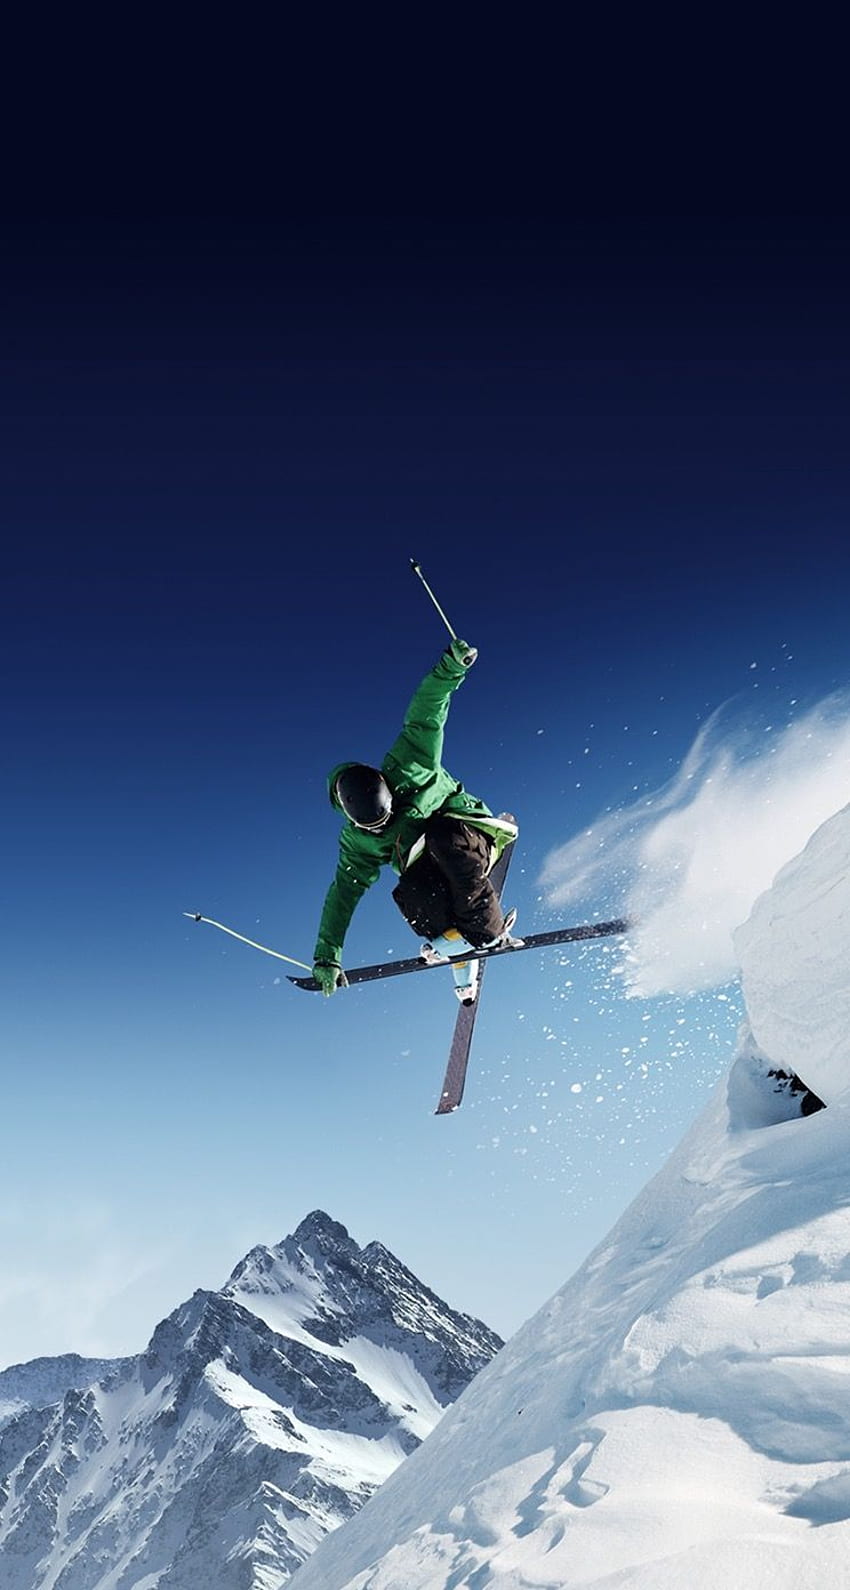 Wallpaper ID 218808  water blue skiier and skiing hd 4k wallpaper free  download